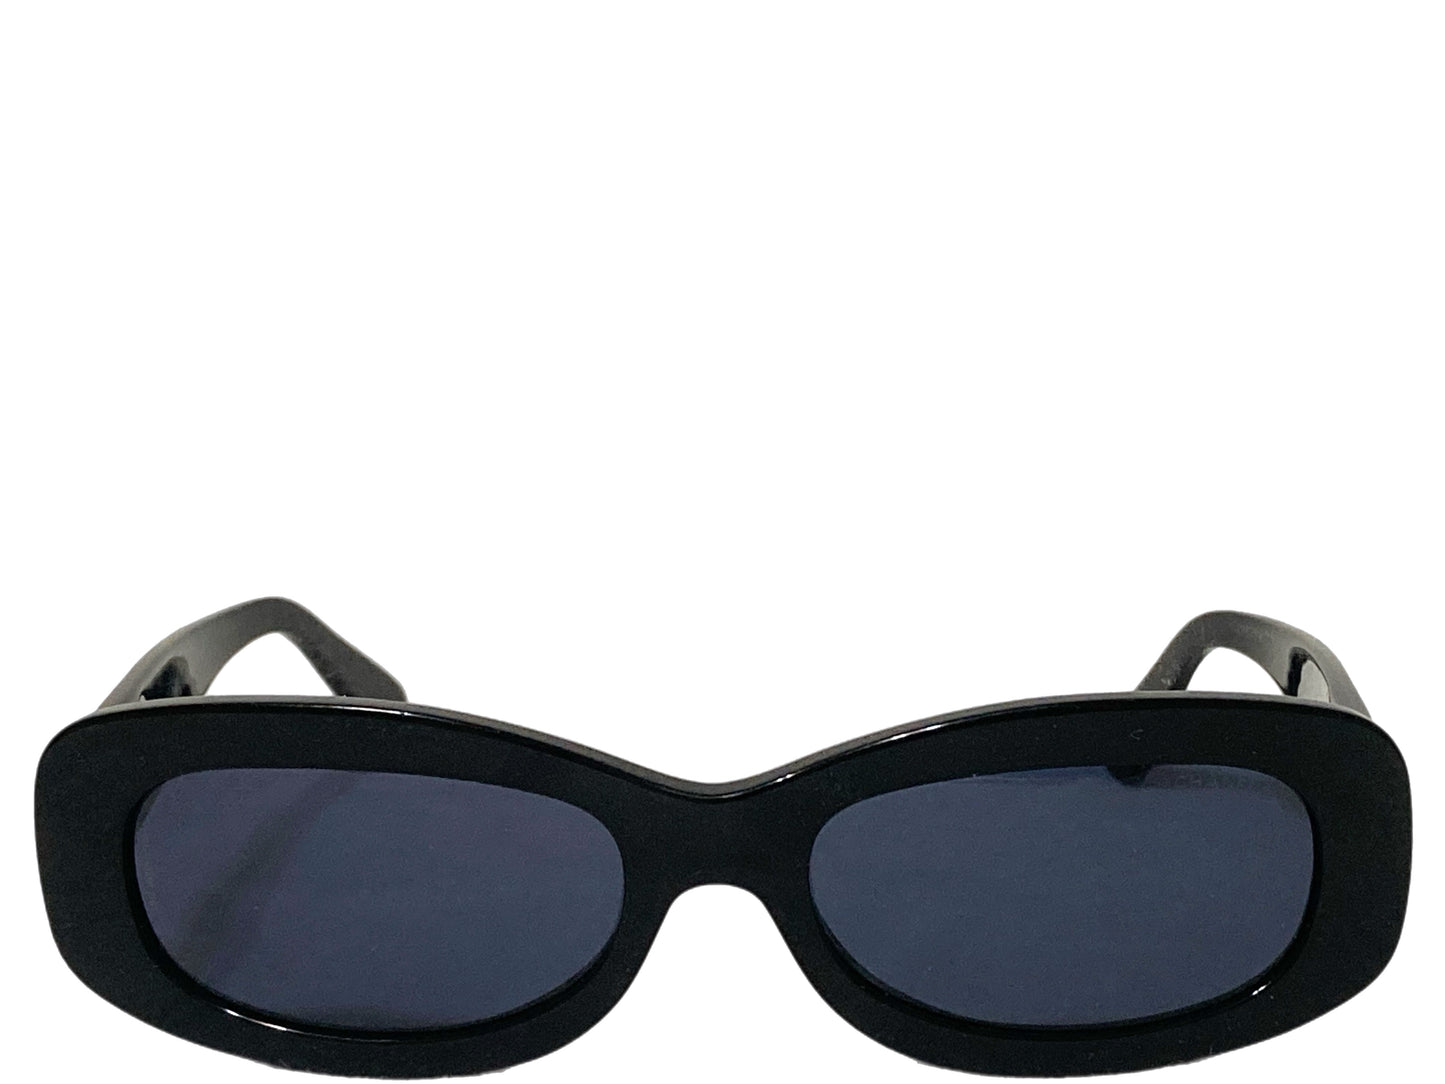 CHANEL Vintage 5054 Women’s Sunglasses Black